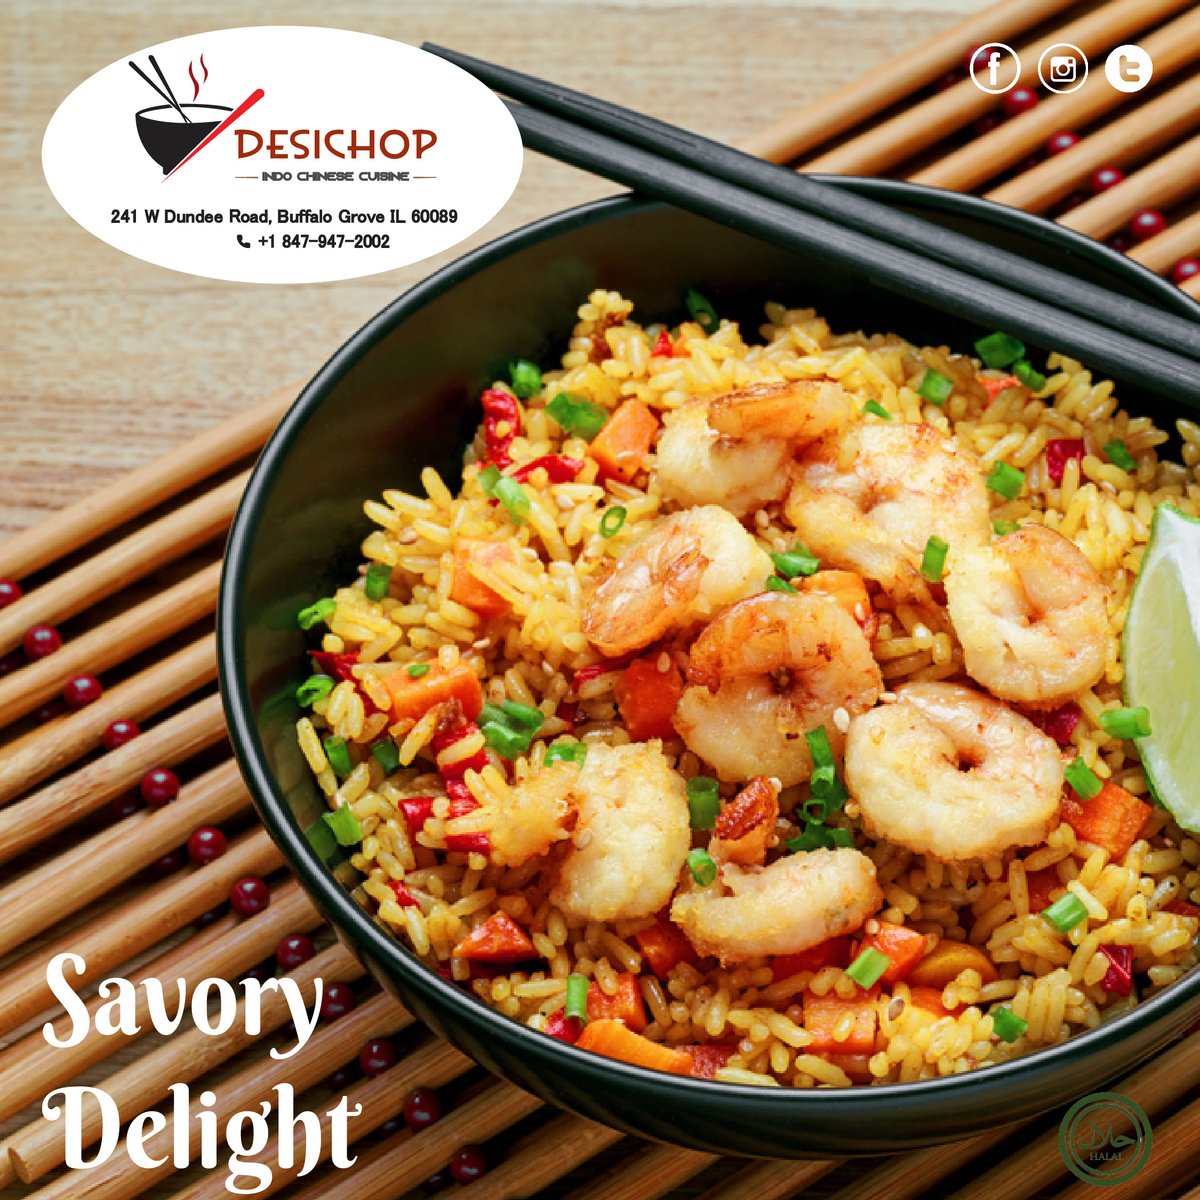 Savory Delight
#ShrimpFriedRice
#AsianCuisine
#FoodieFavorites
#FlavorfulEats
#RiceLovers
#SeafoodDelight
#TastyTreats
#GourmetGoodness
#ElevatedComfortFood
#FoodieFusion